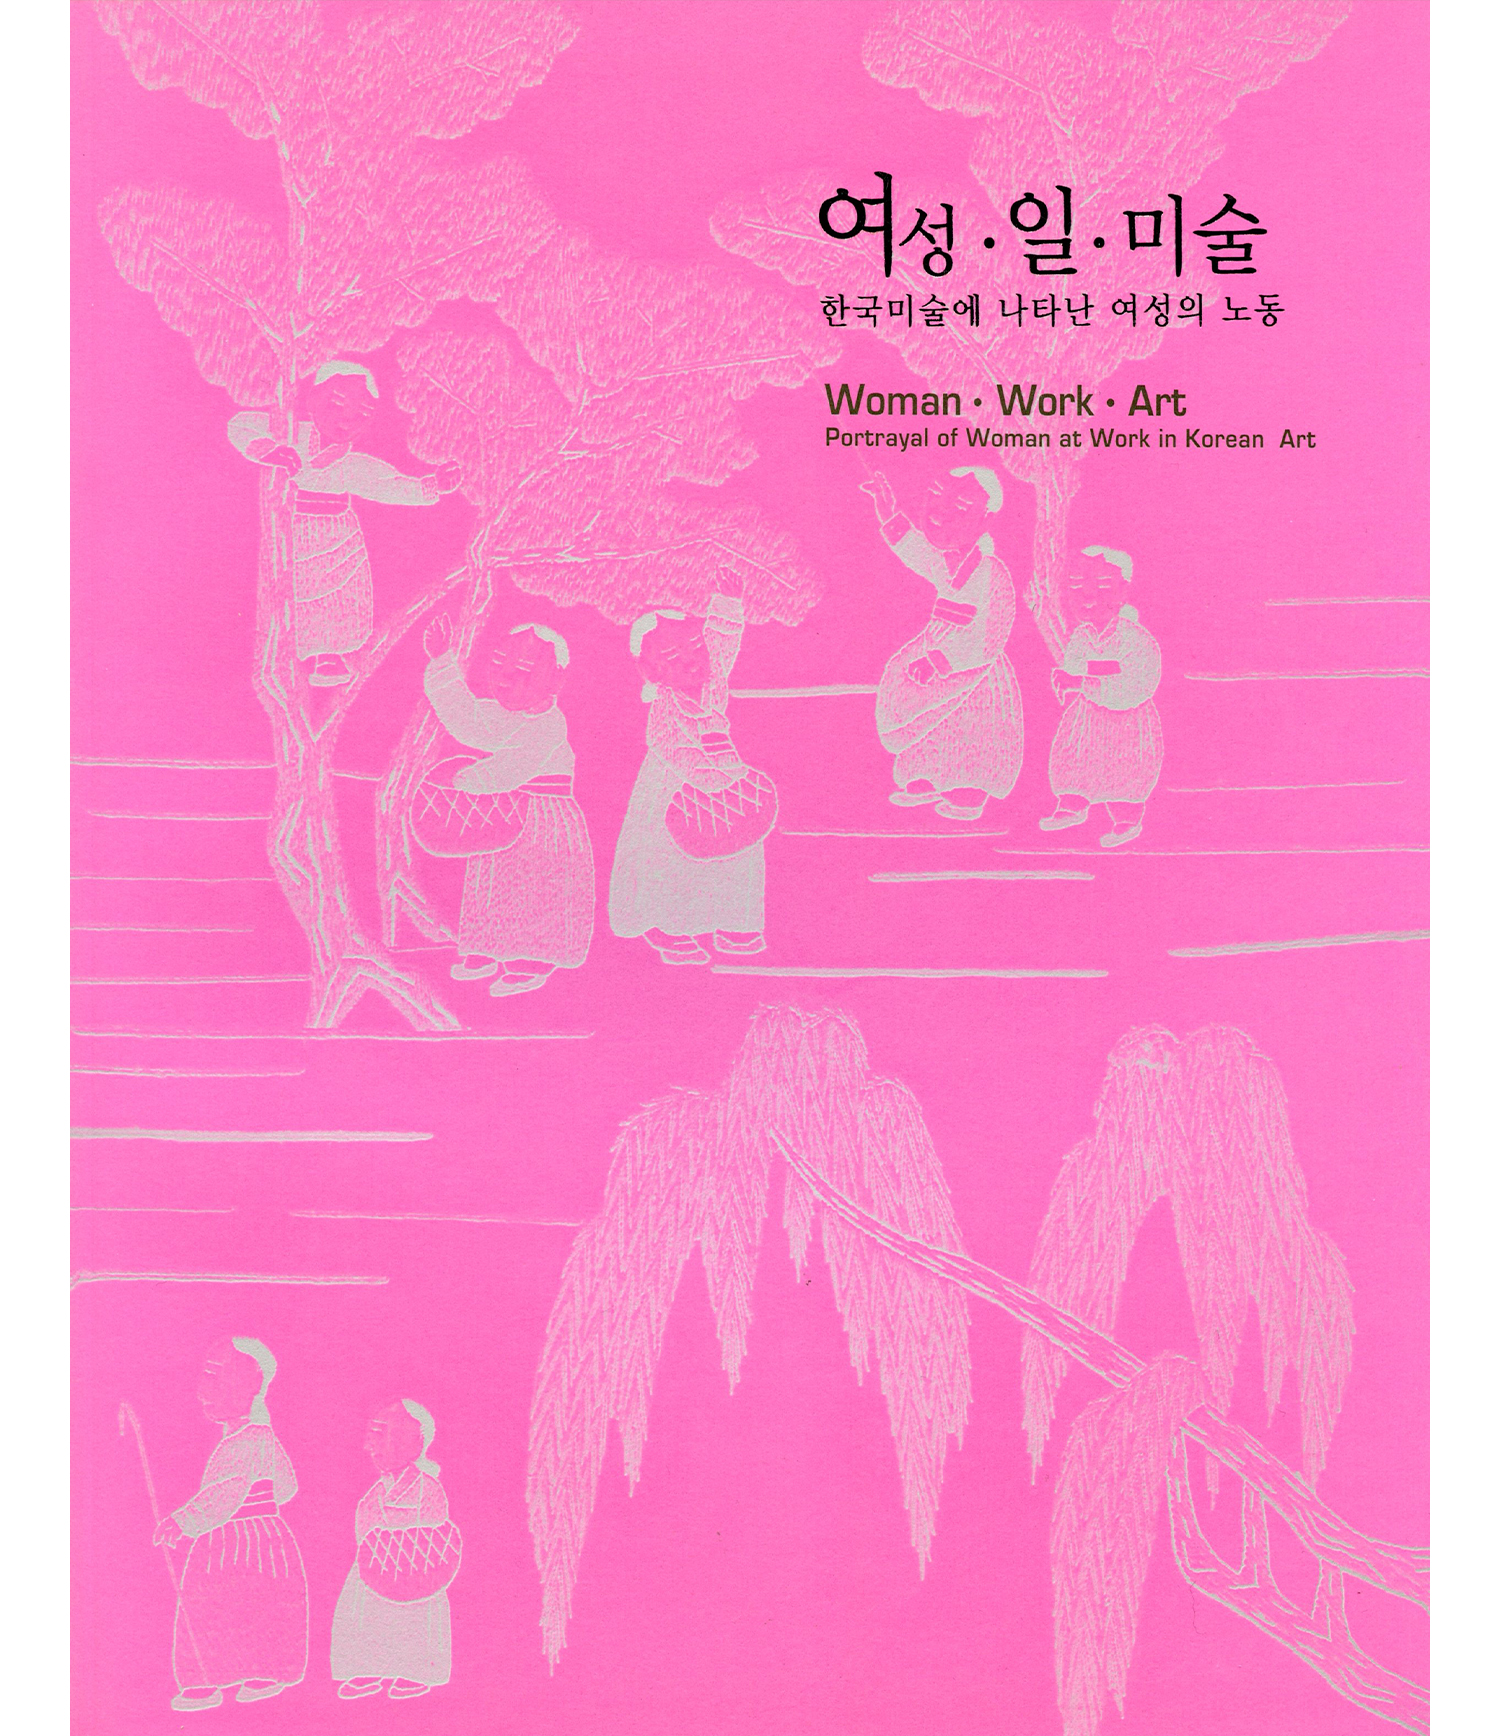 Woman / Work / Art: Portrayal of Woman at Work in Korean Art